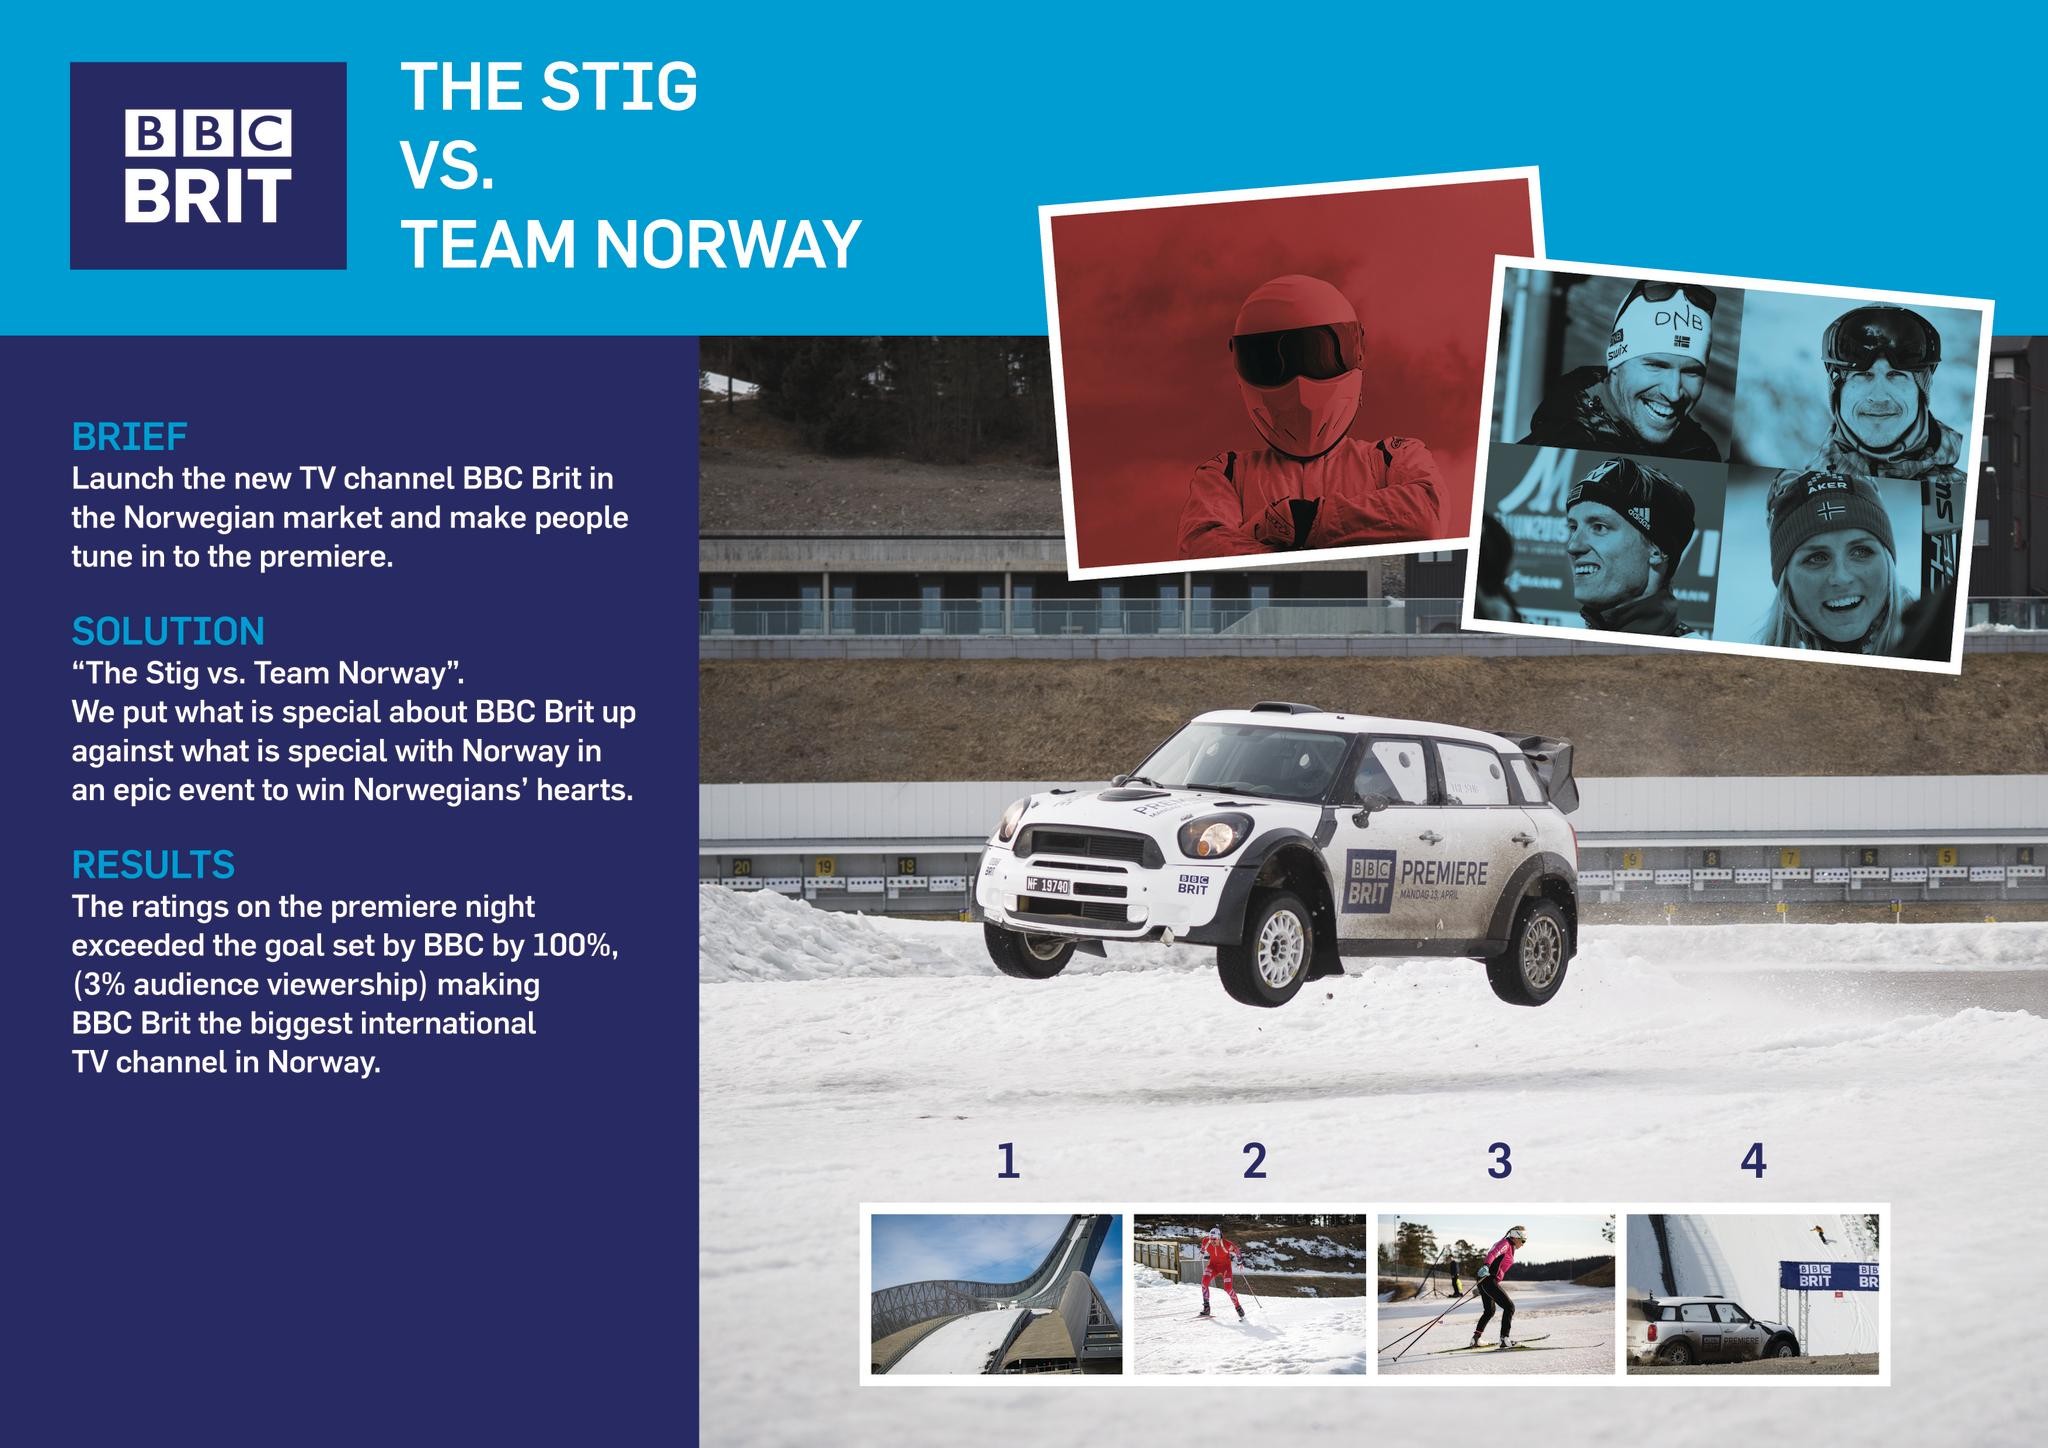 THE STIG VS. TEAM NORWAY